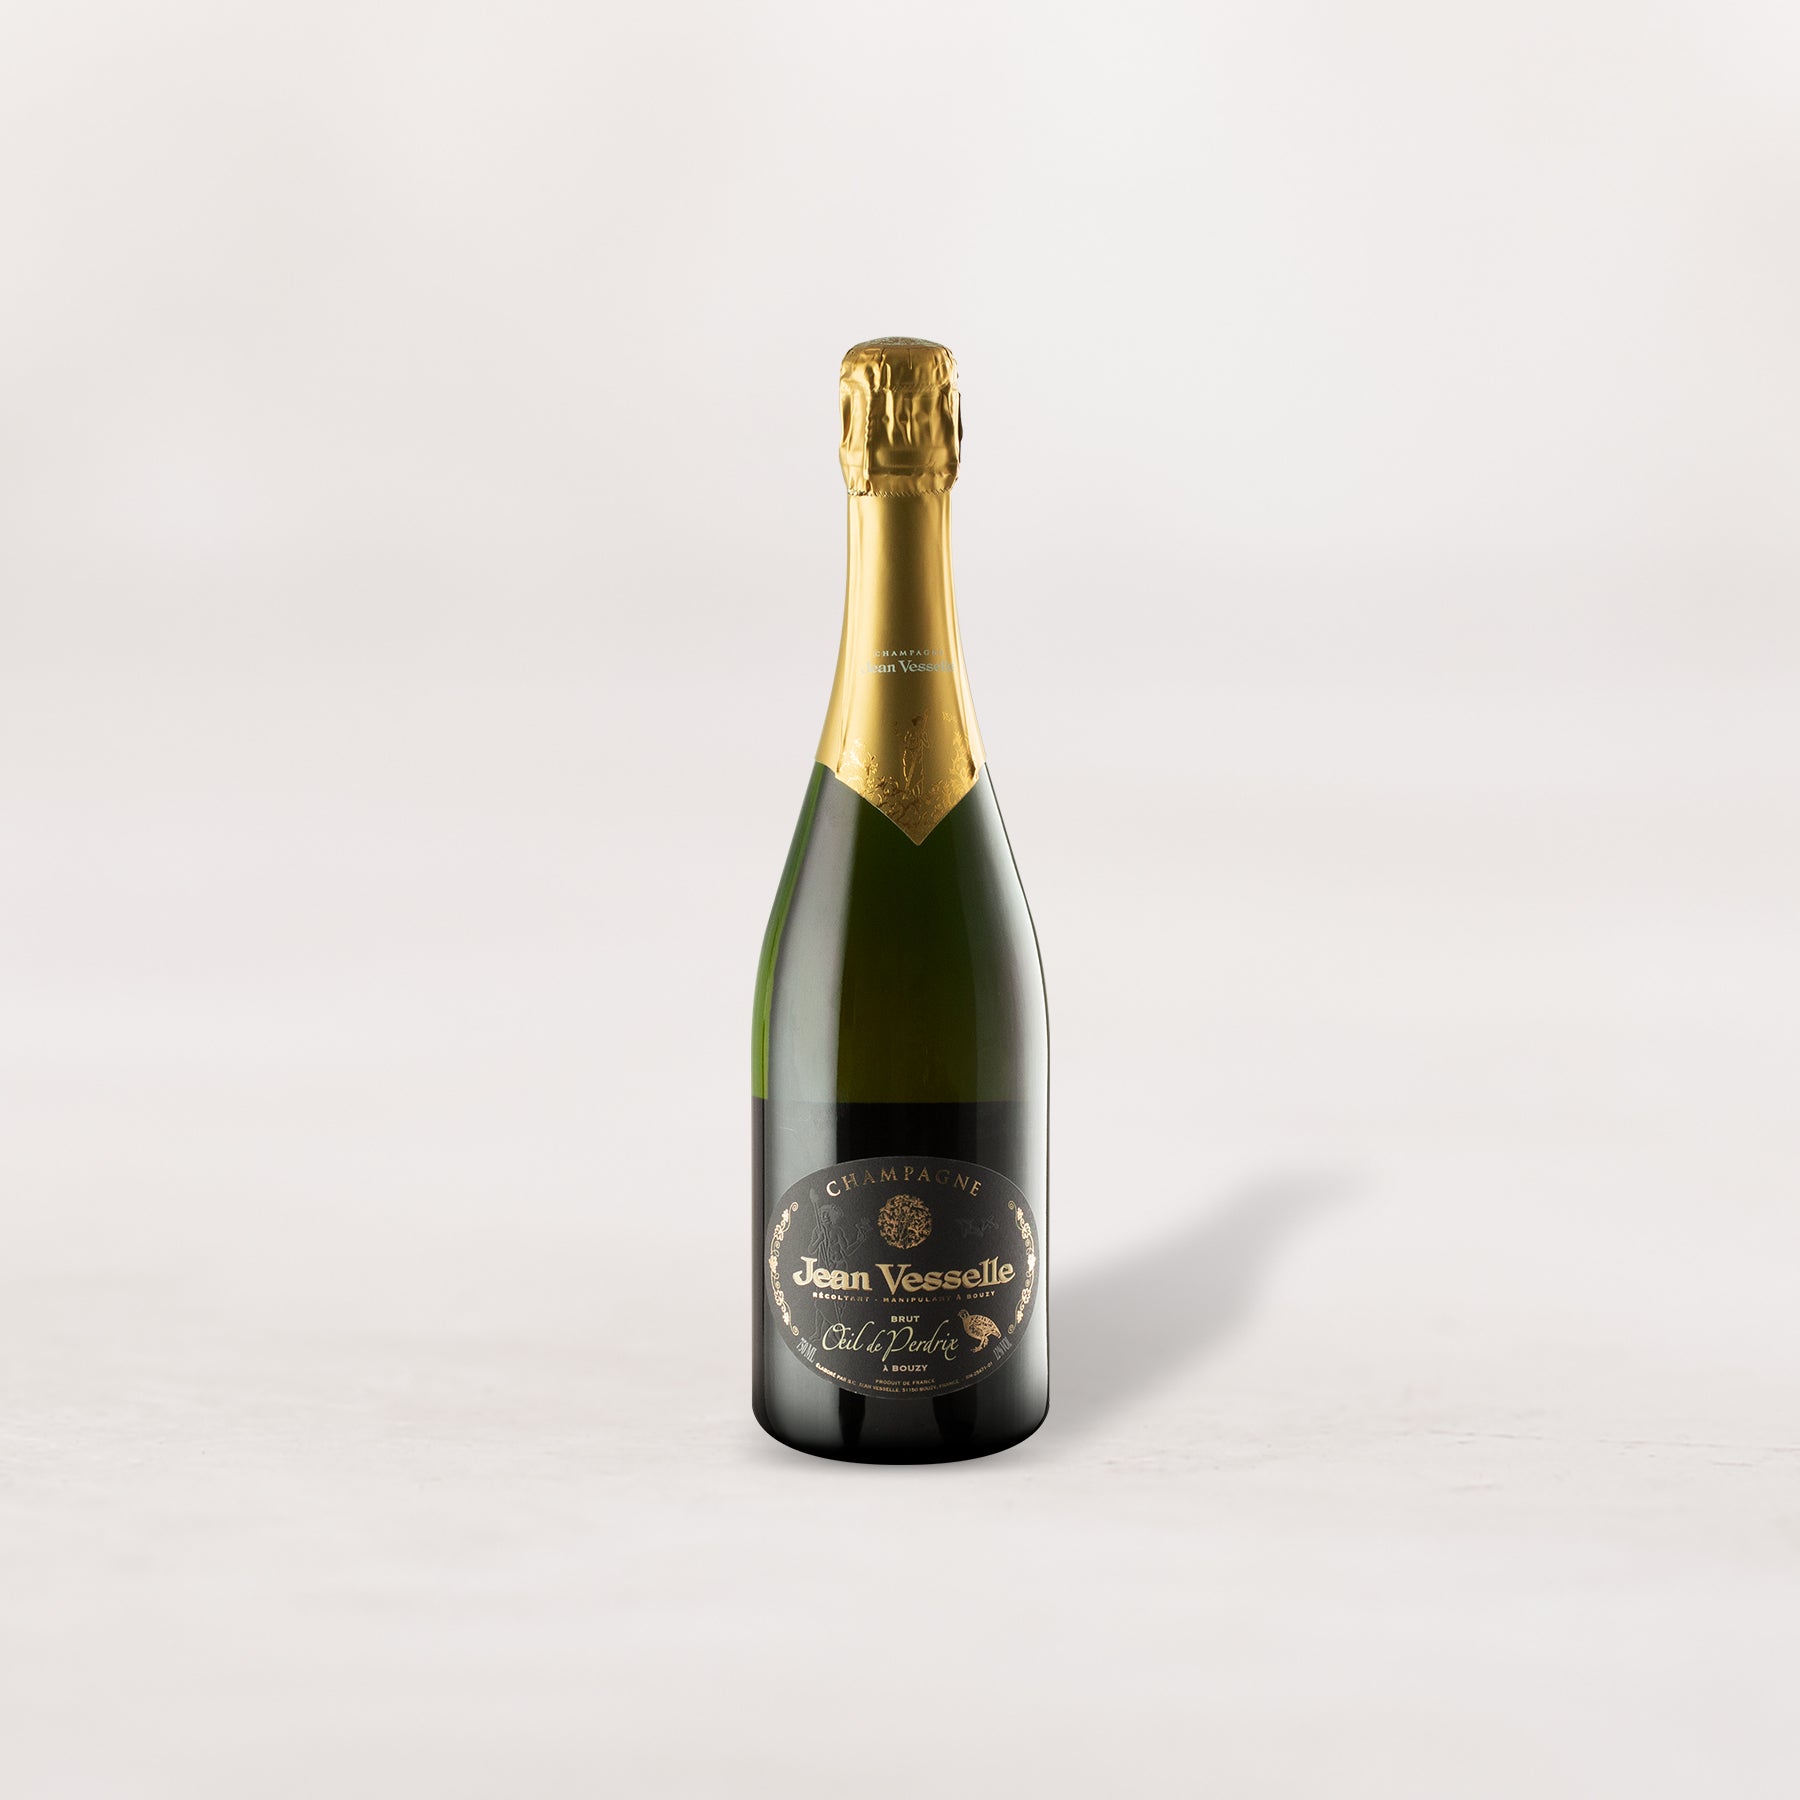 Vesselle, Champagne Brut "Oeil de Perdrix"